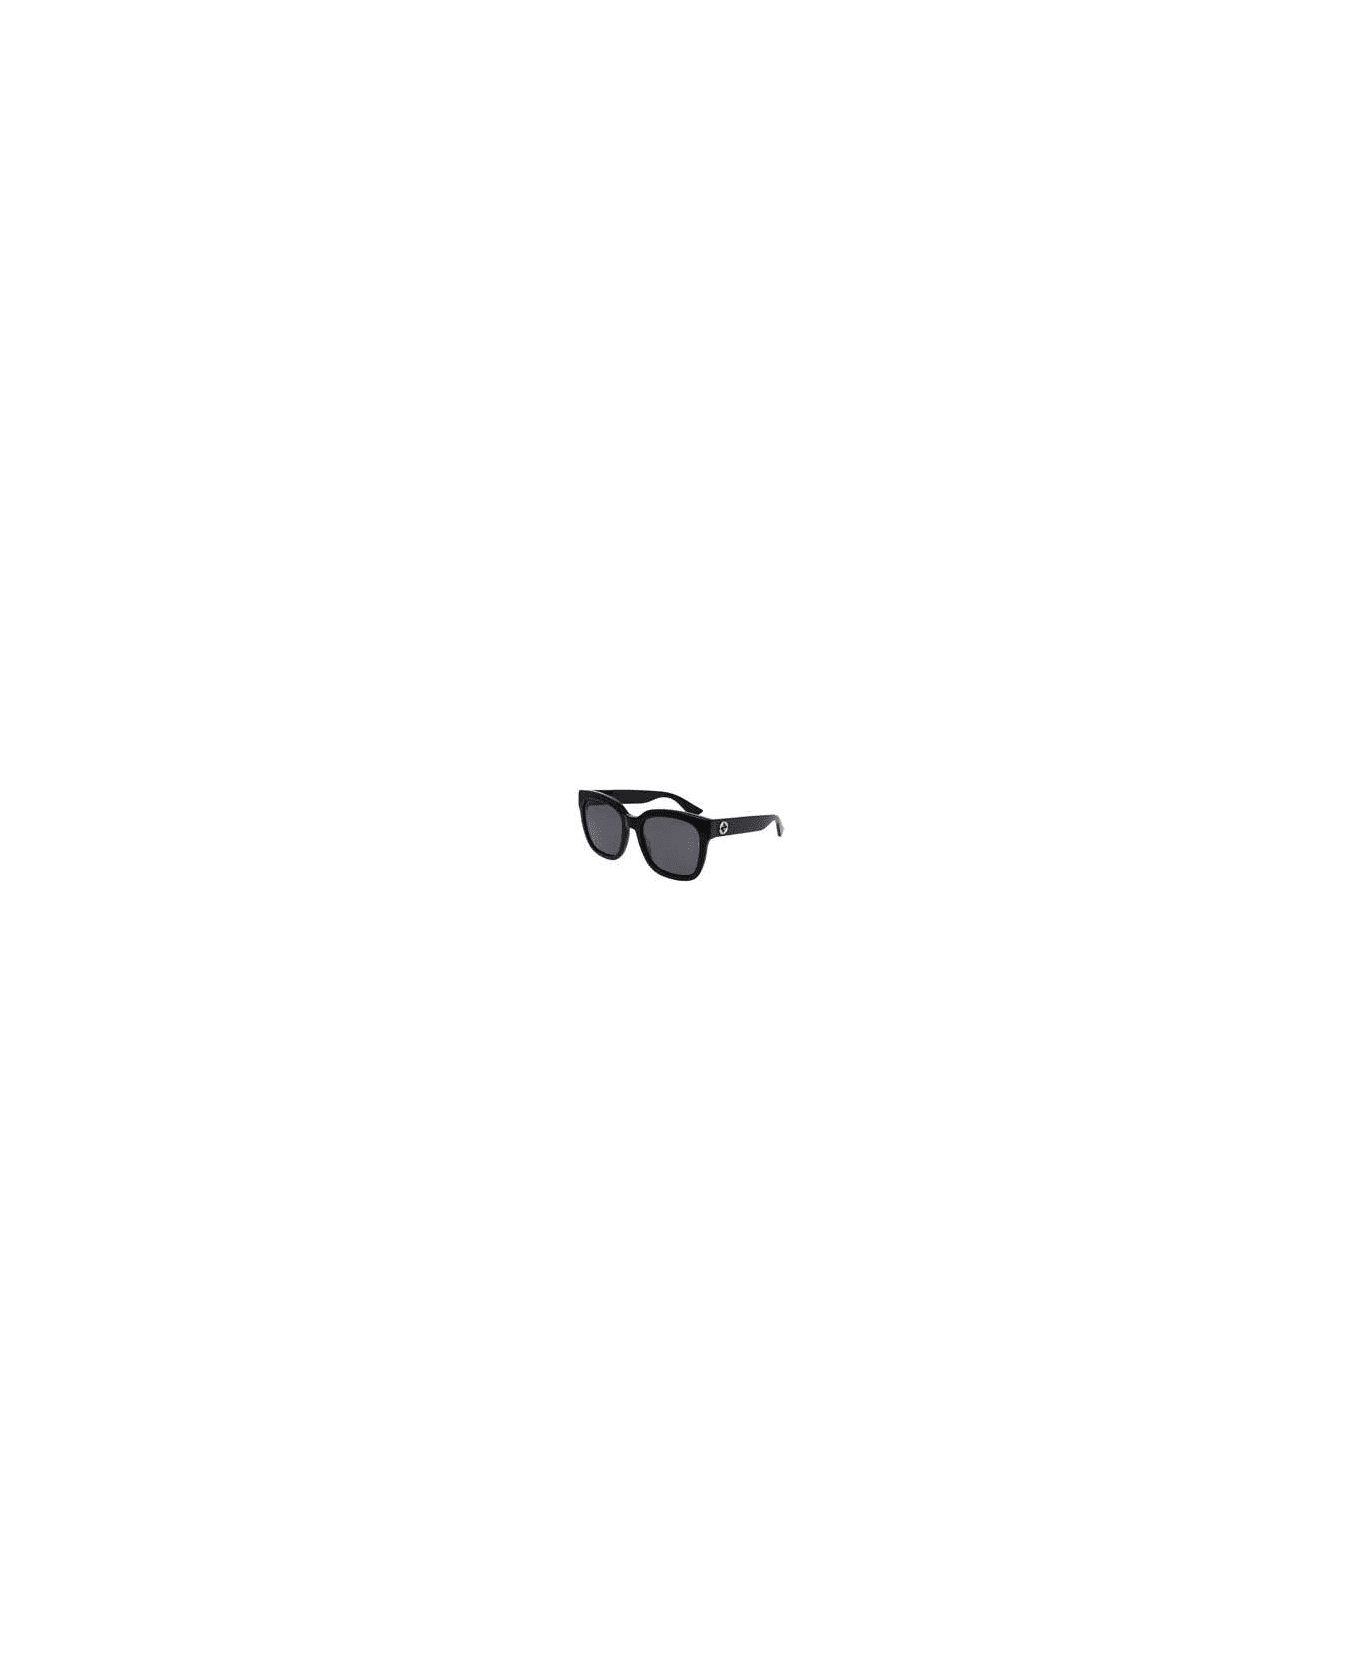 Gucci Eyewear Gg0034sn Sunglasses - 001 black black grey